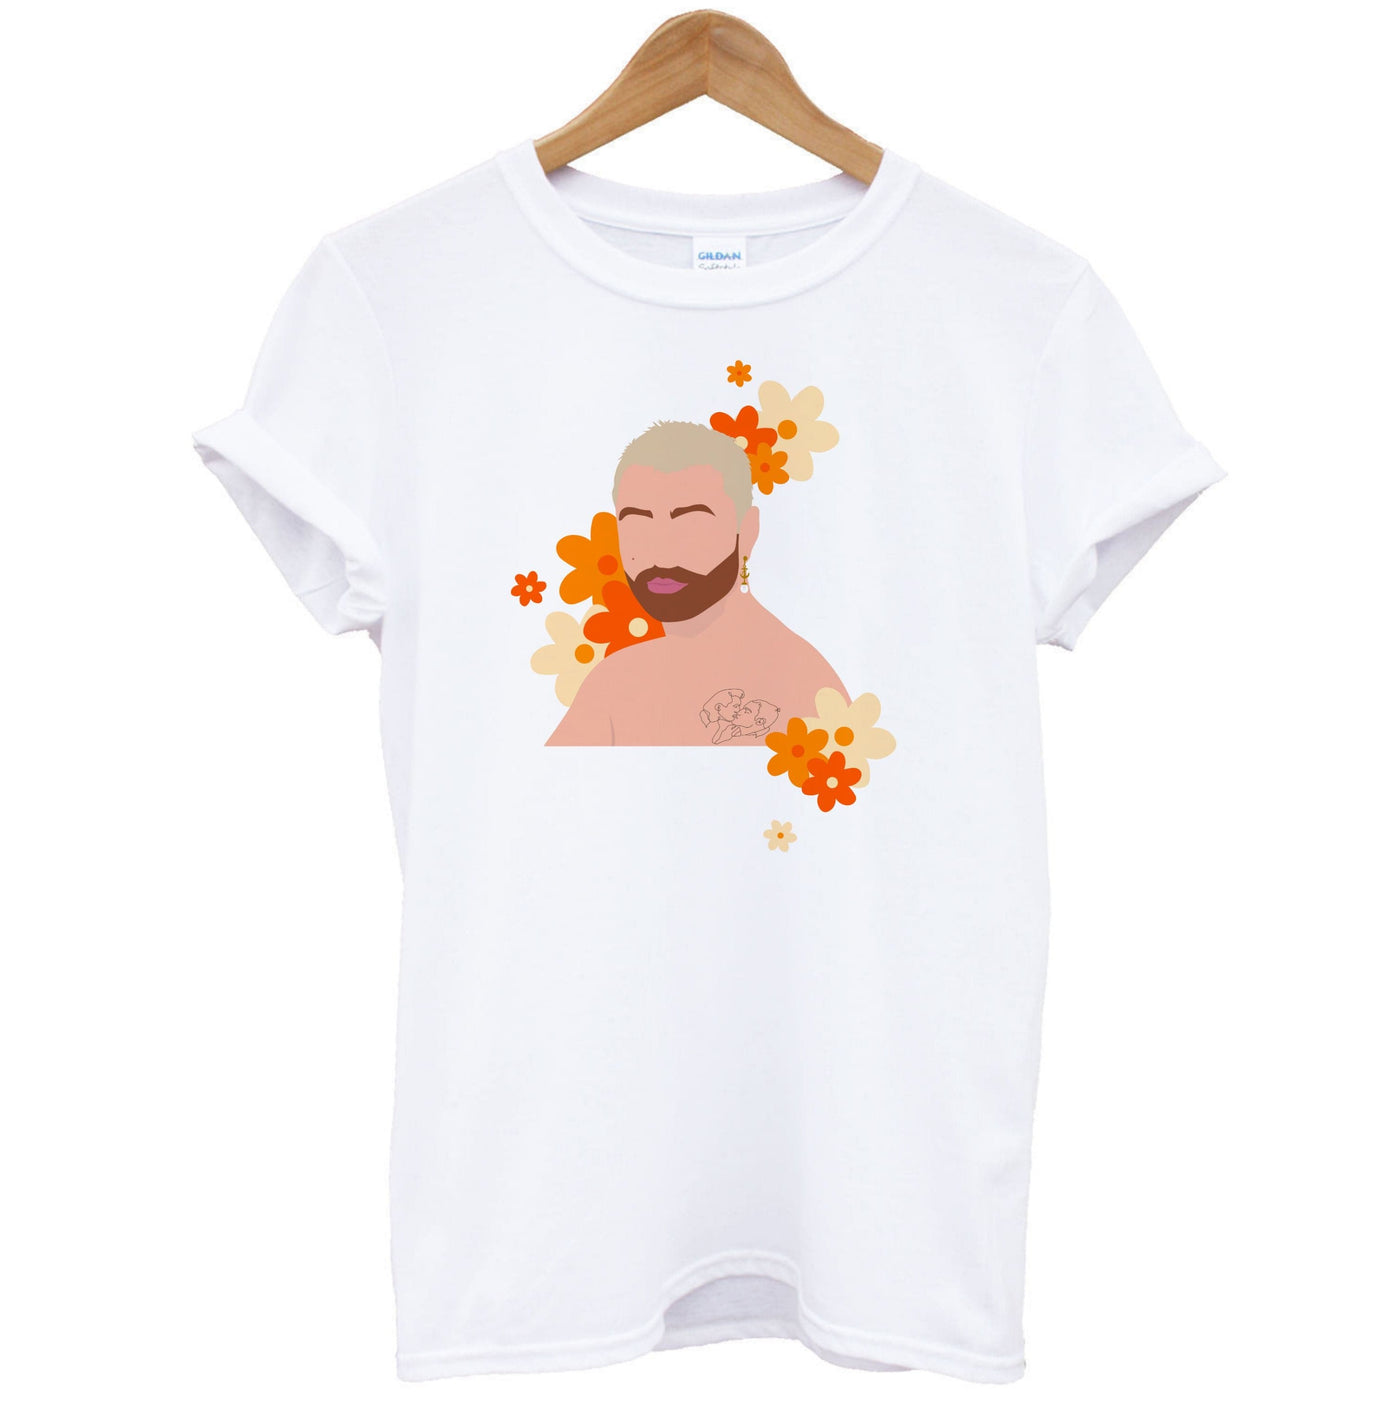 Flower - Sam Smith T-Shirt